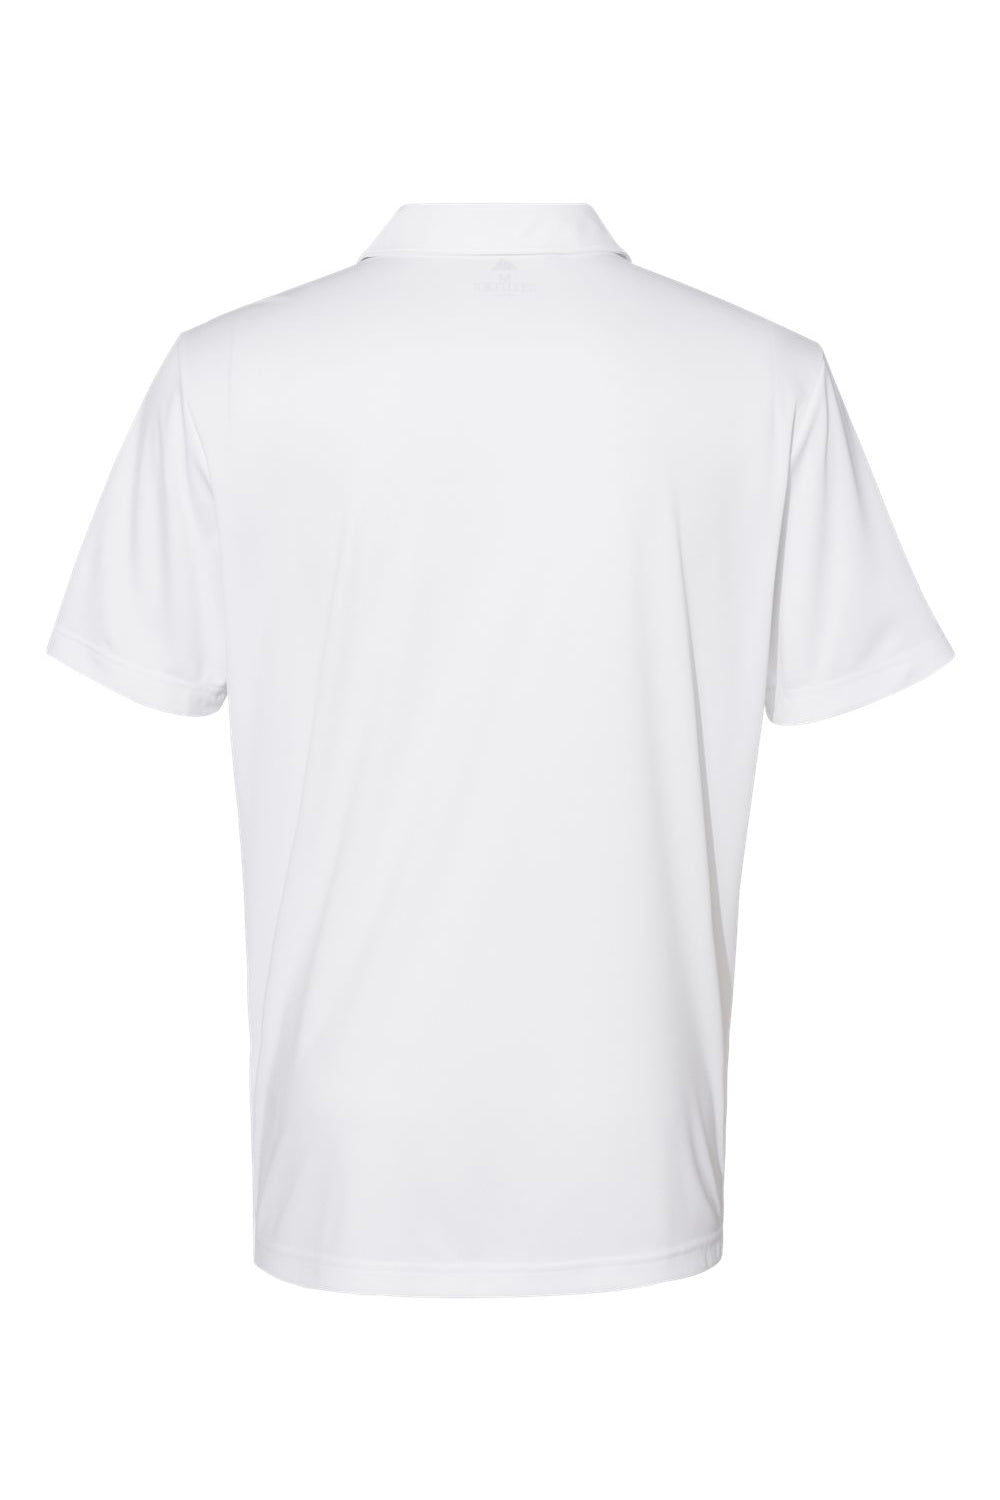 Adidas A324 Mens 3 Stripes Short Sleeve Polo Shirt White/Black Flat Back